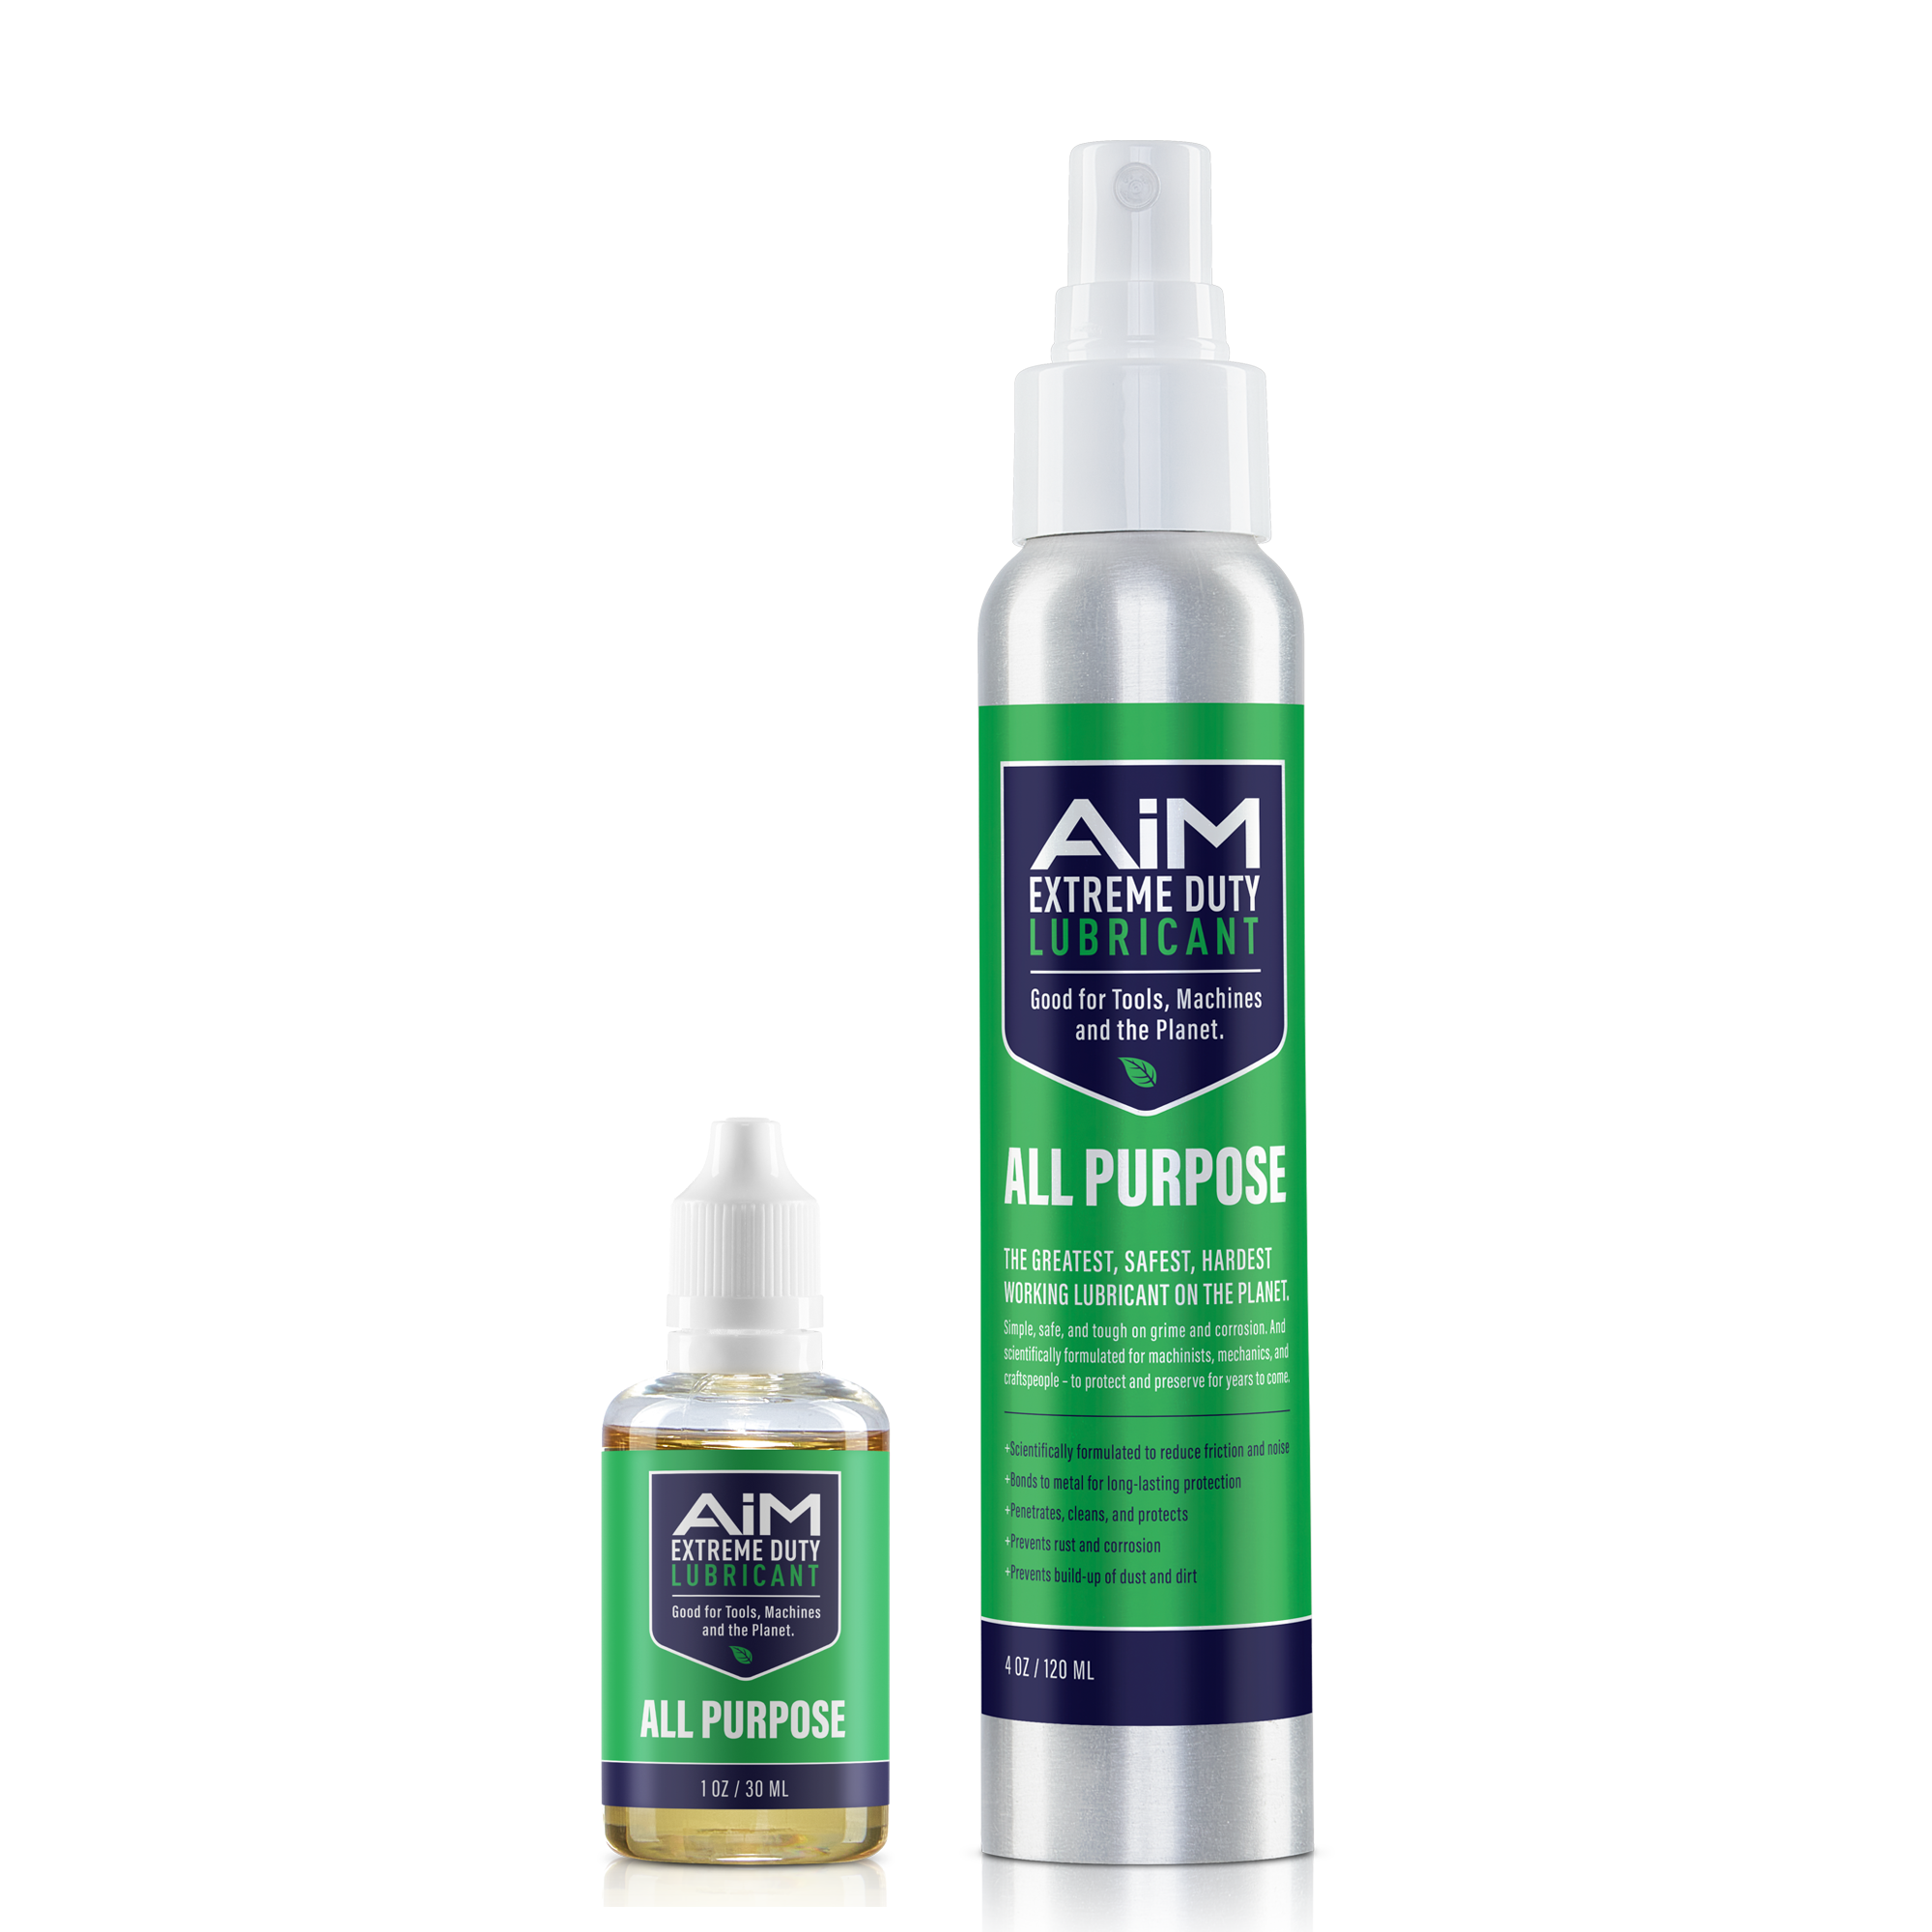 AiM Extreme Duty Lubricant | All Purpose | Bundle | 4 oz sprayer + 1 oz precision